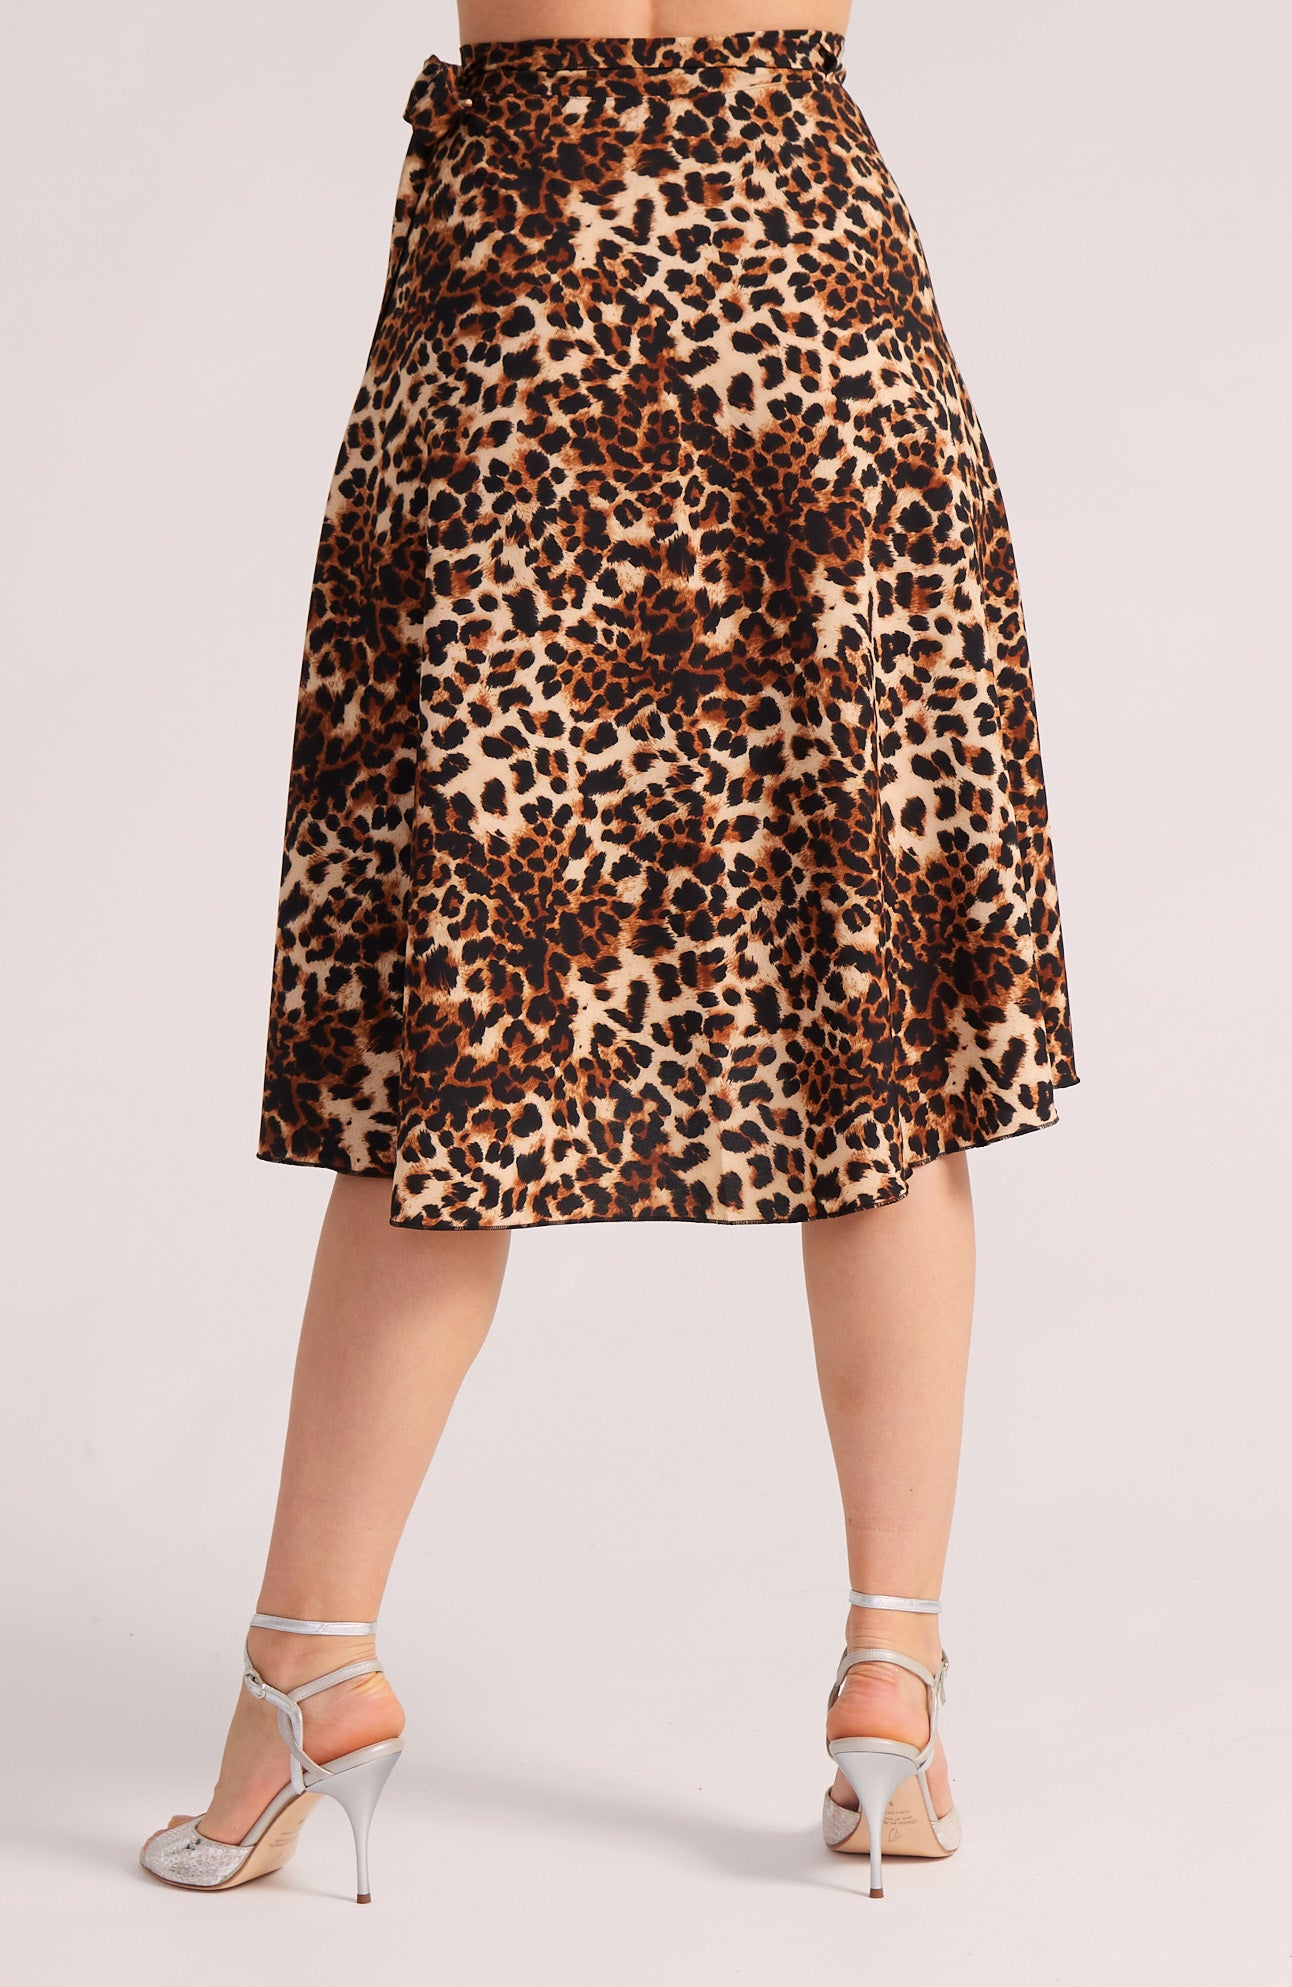 COCO - Leopard Wrap Skirt